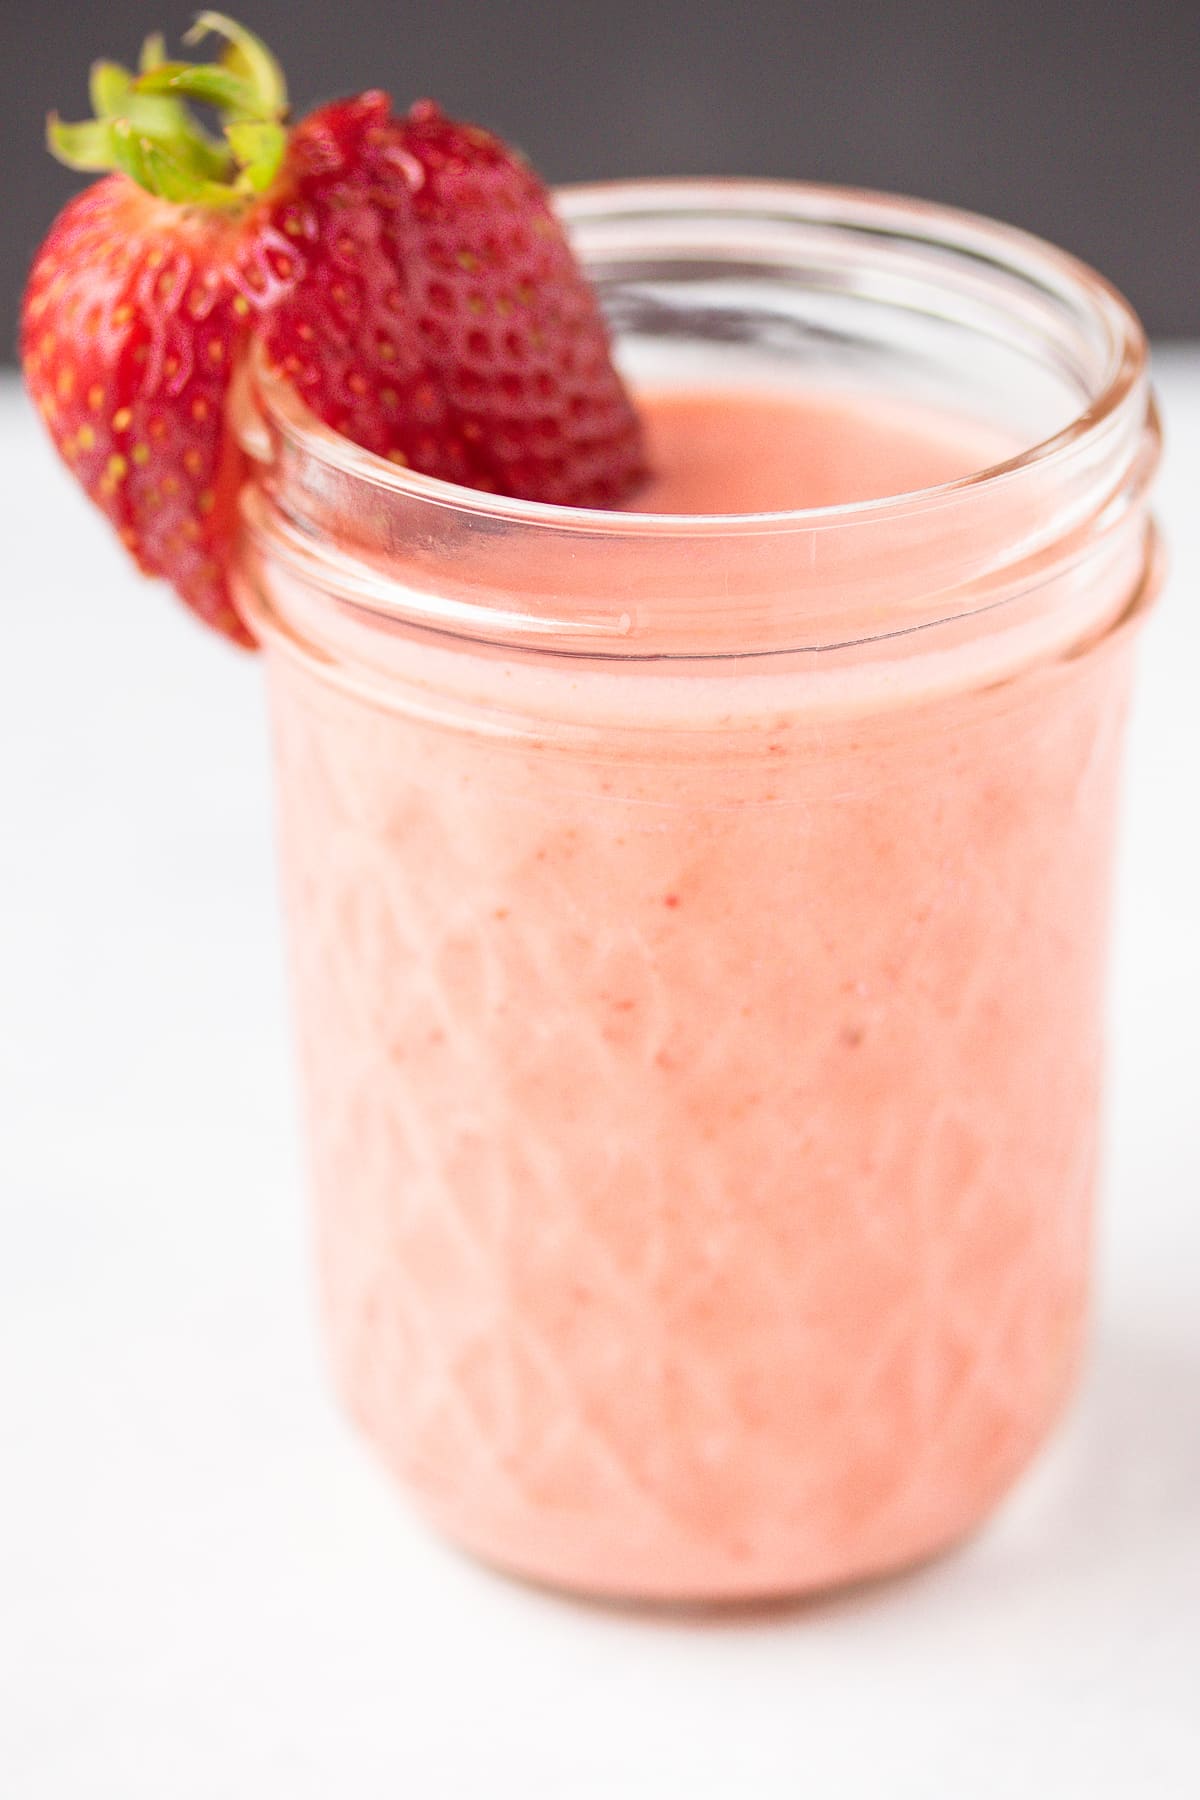 creamy strawberry dressing in a glass jar.